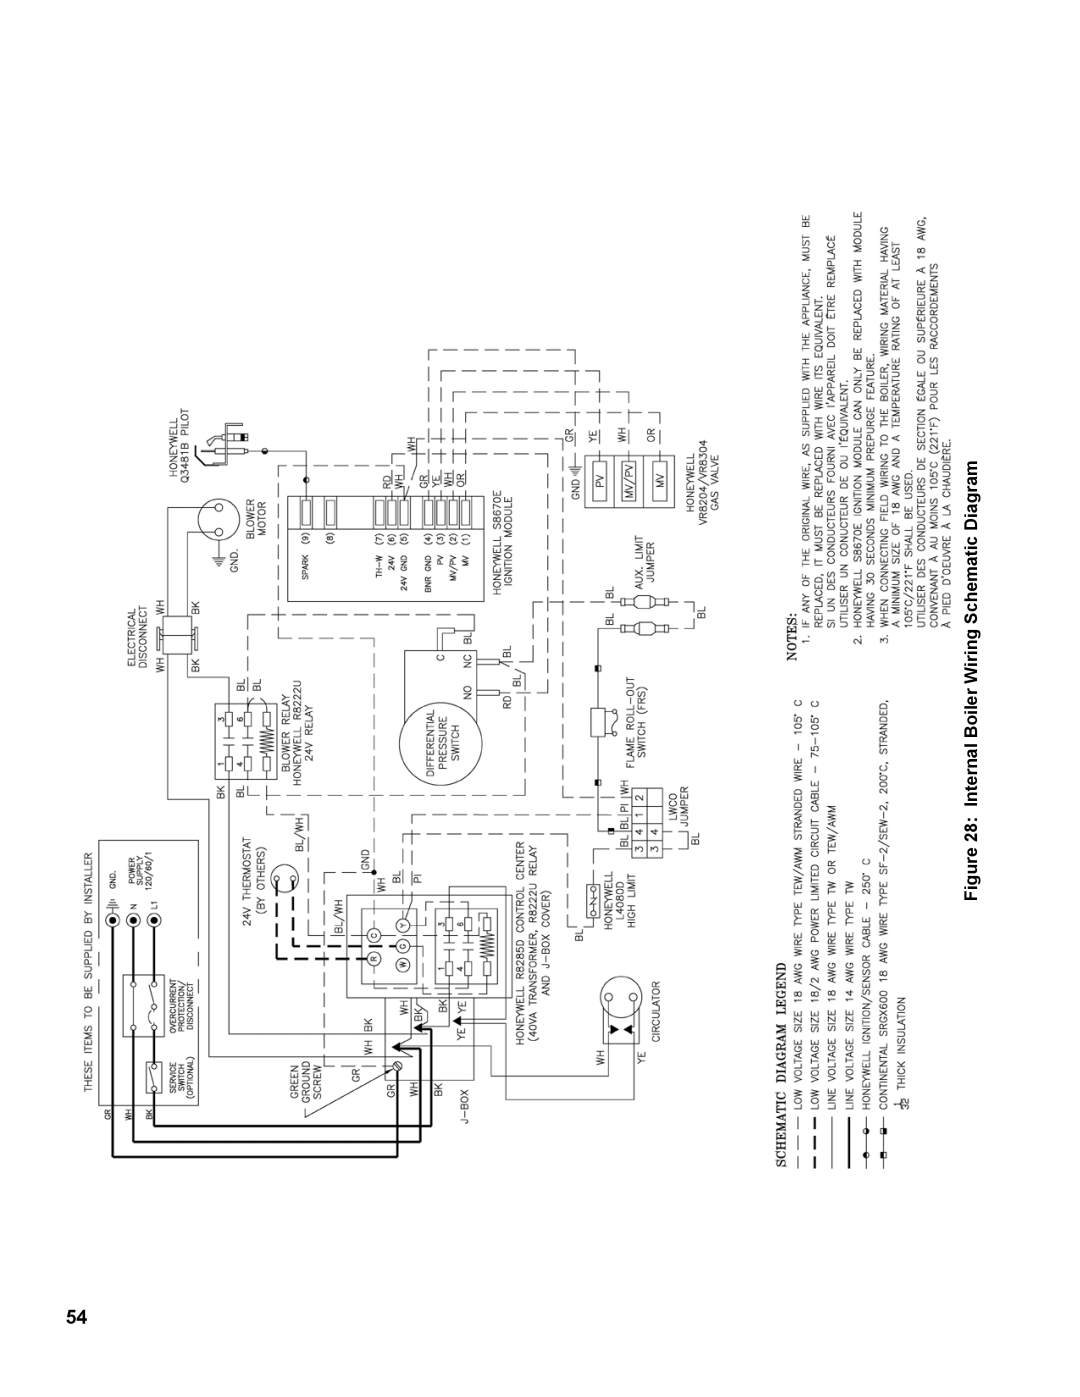 Burnham 1100-H4 manual Internal Boiler Wiring Schematic Diagram 